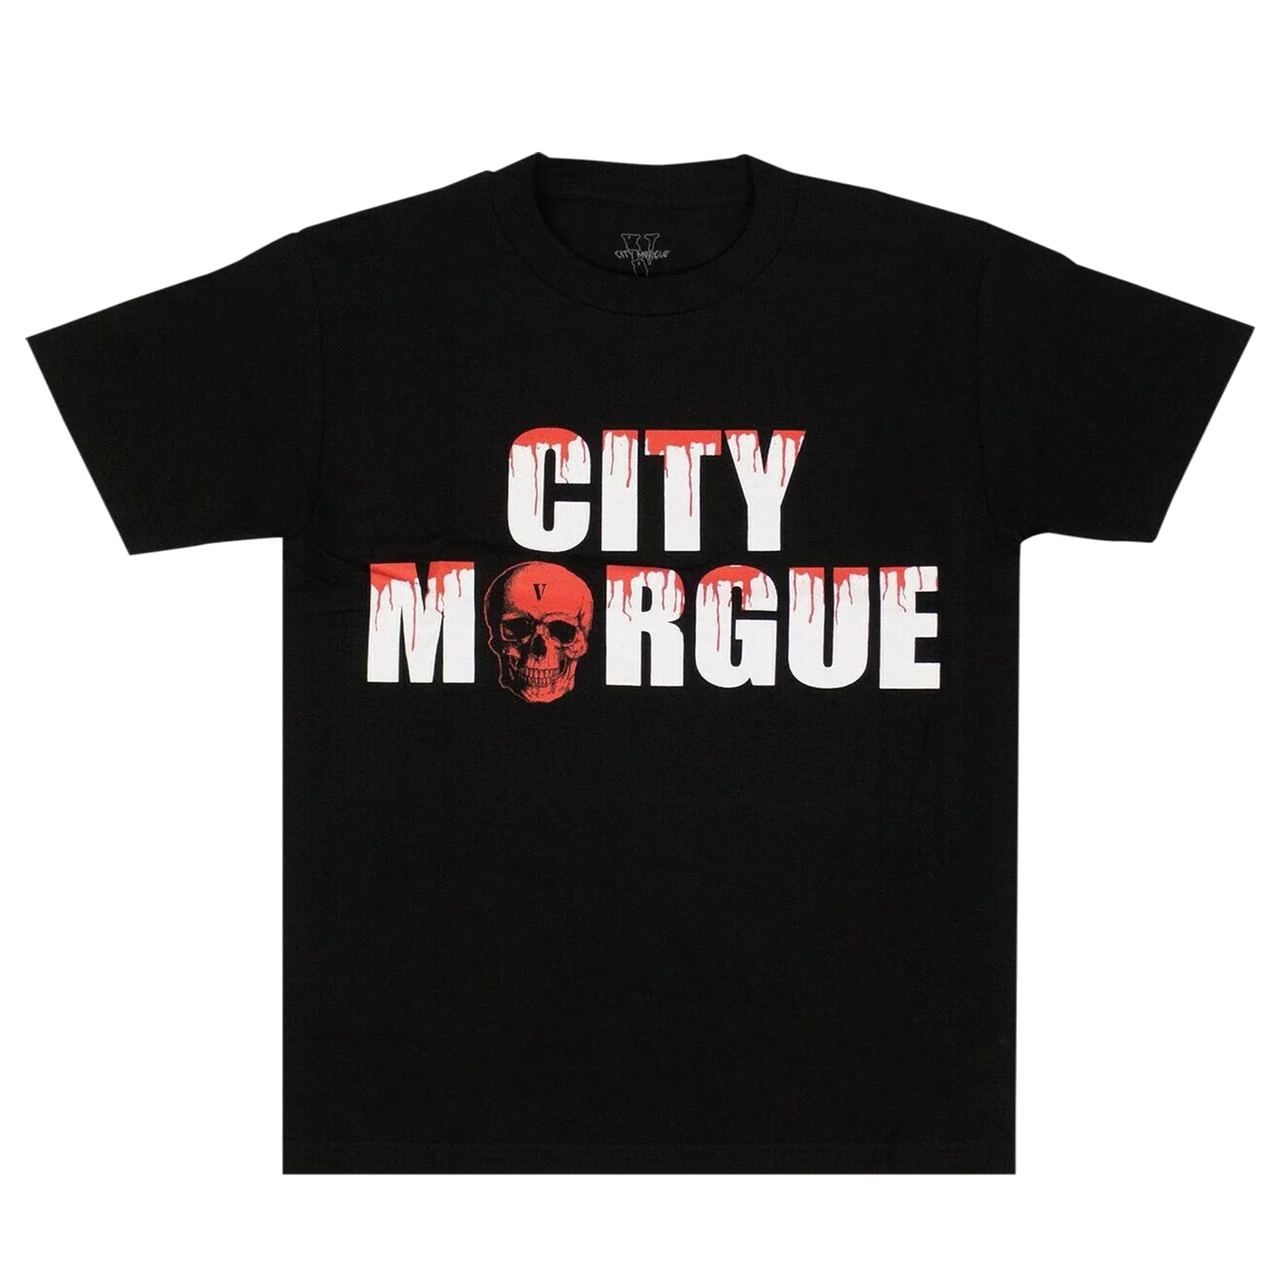 Vlone x City Morgue Dogs Tee Black